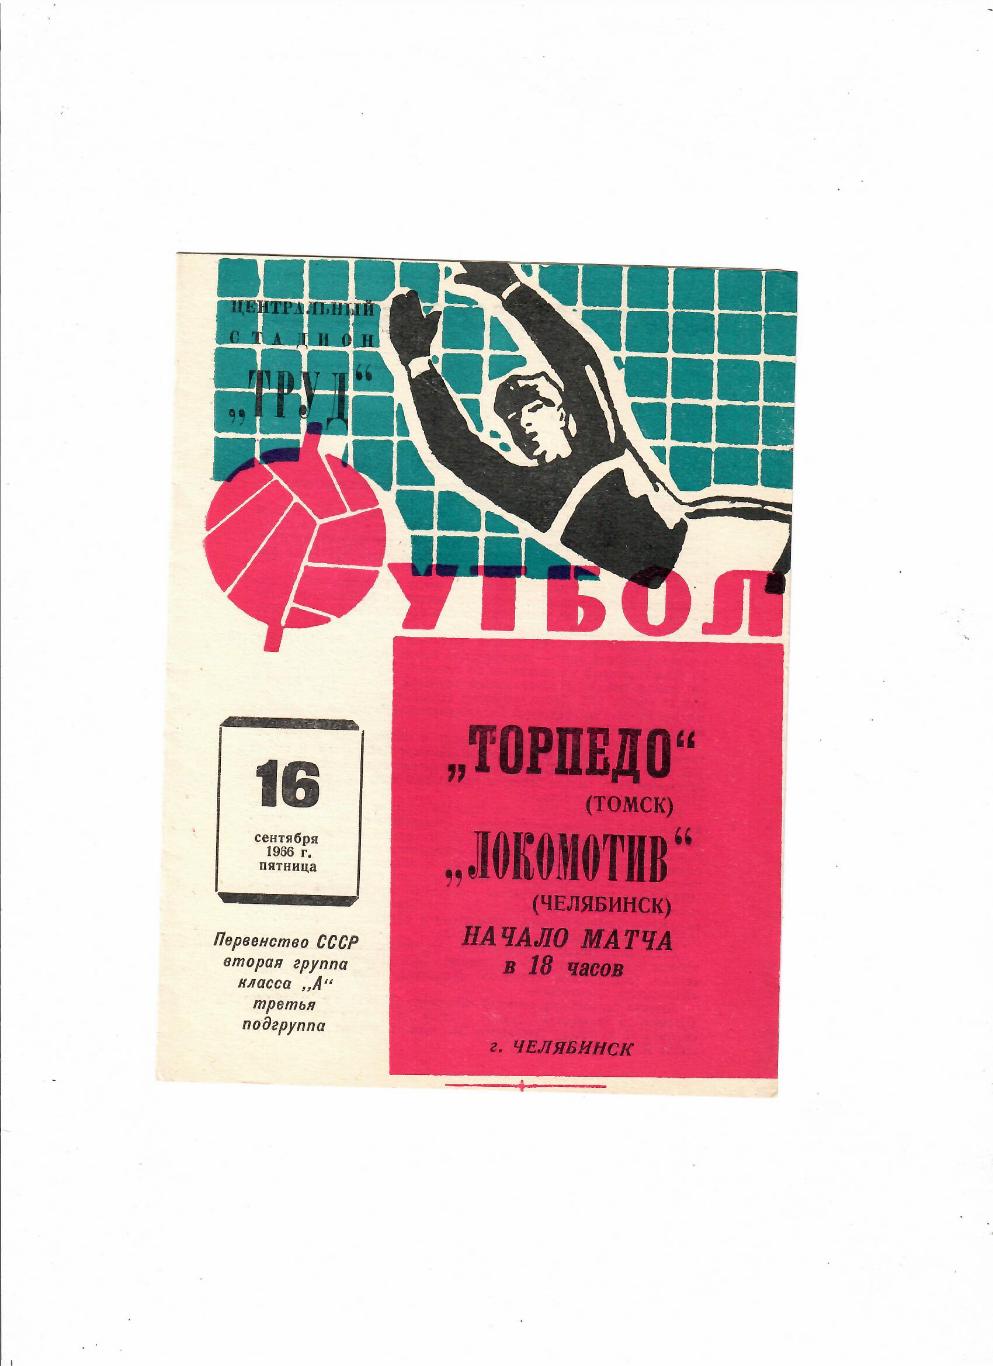 Локомотив Челябинск-Торпедо Томск 1966